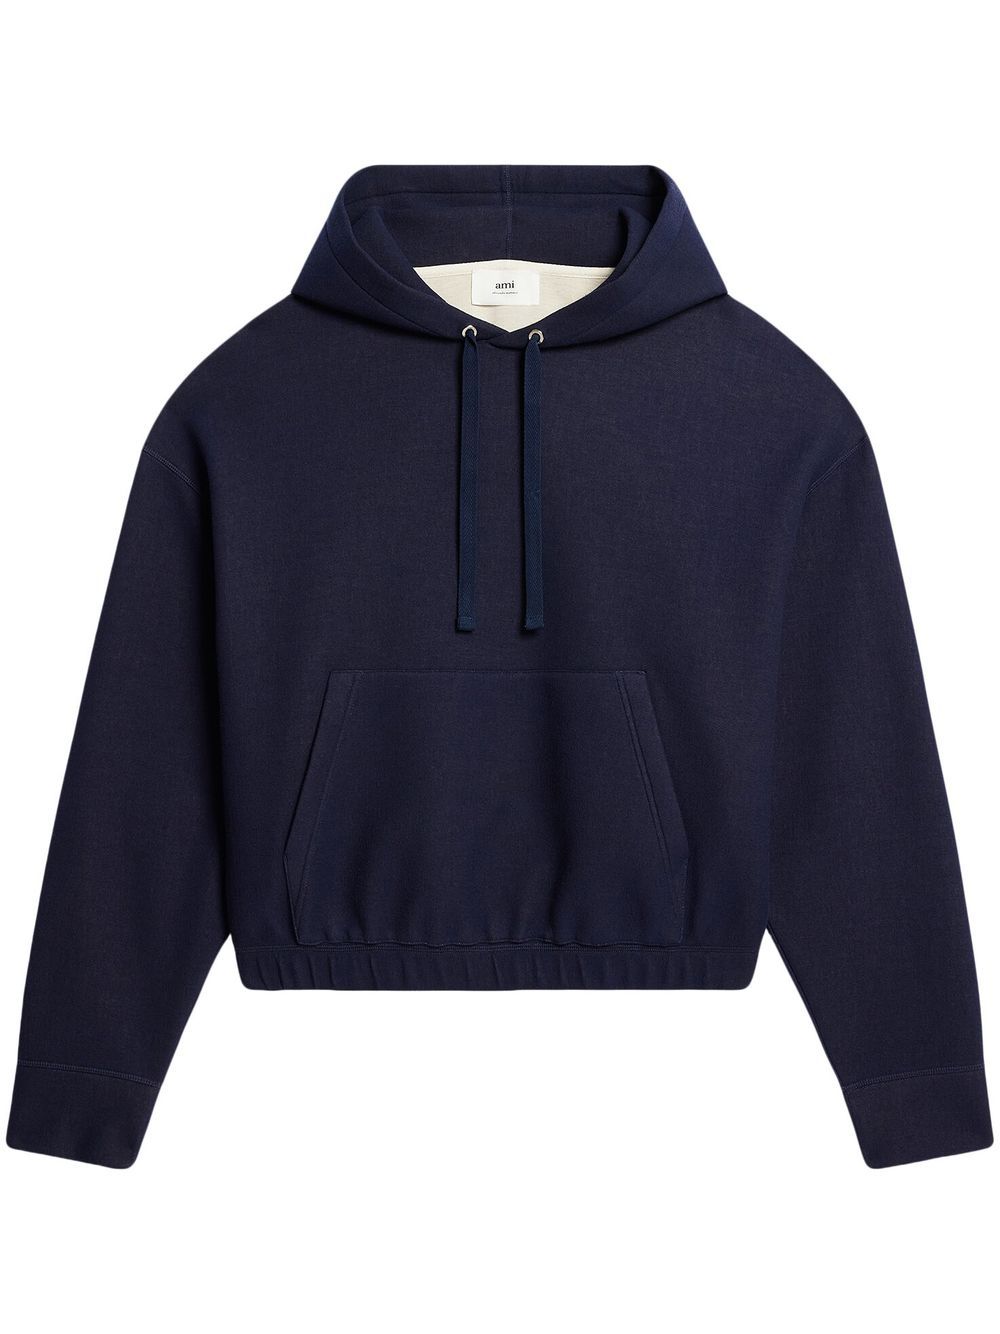 Image 1 of AMI Paris drop-shoulder drawstring hoodie